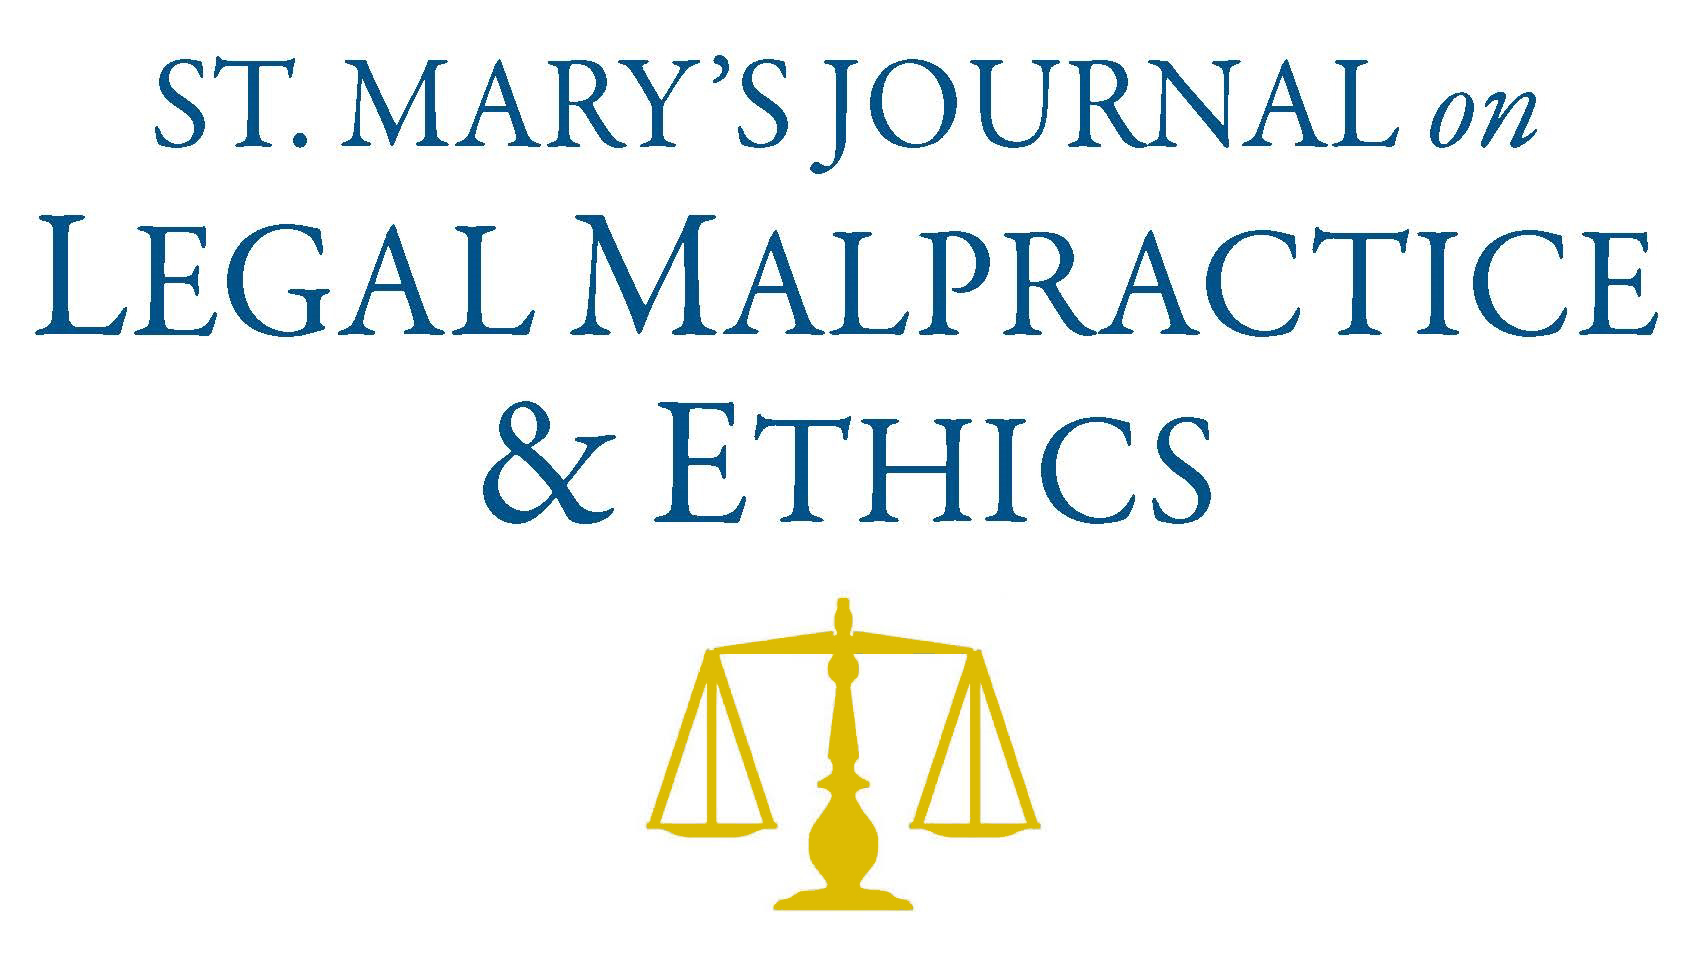 Annual Symposium on Legal Malpractice & Ethics